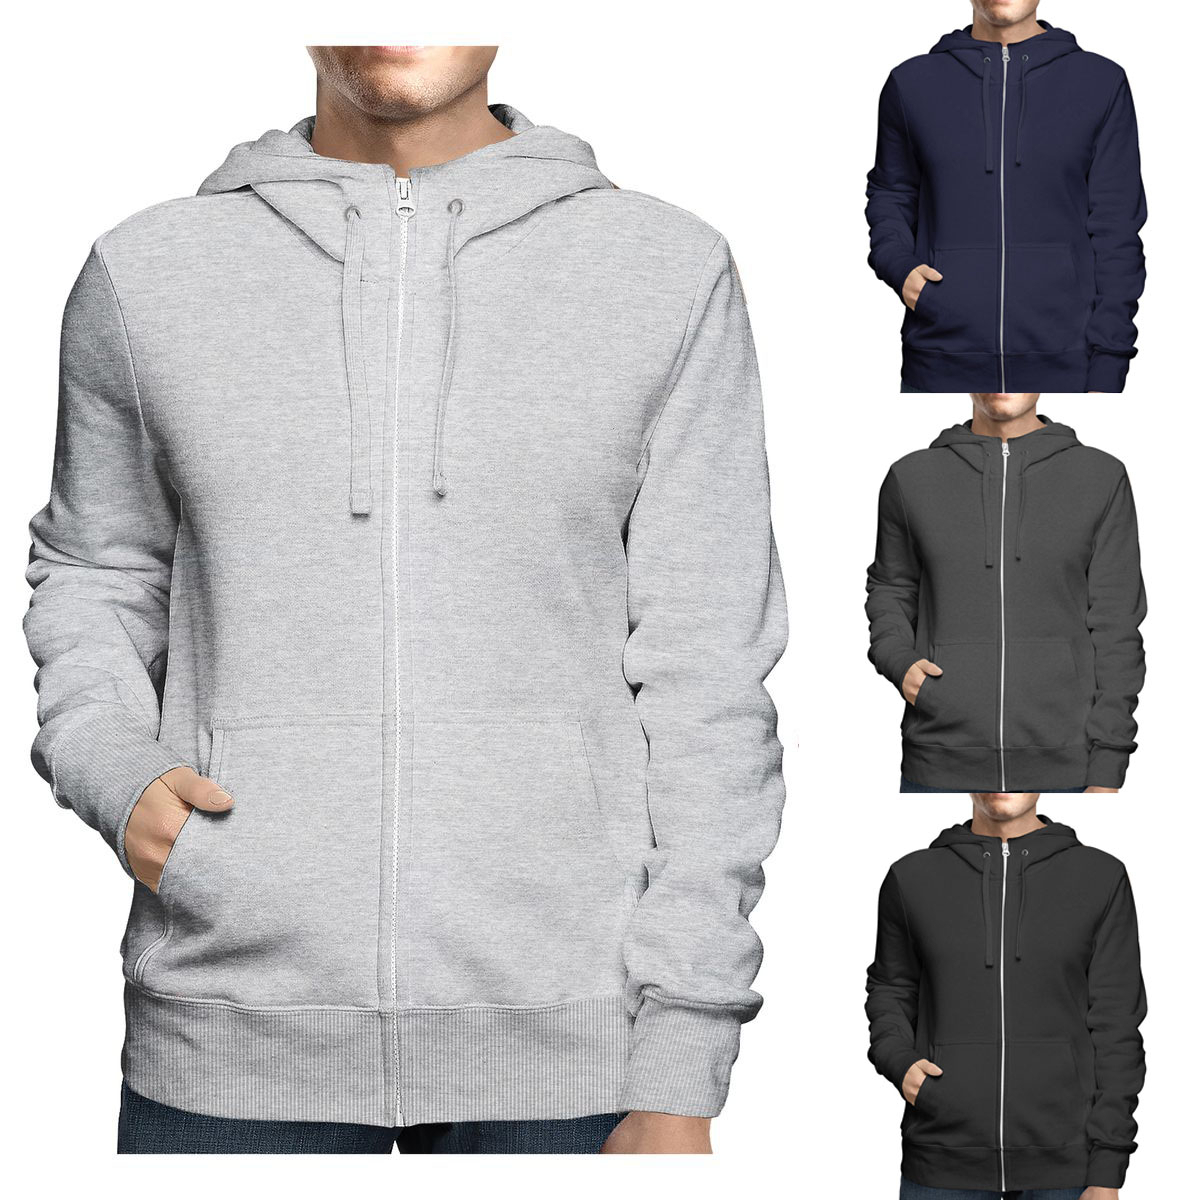 Multi-Pack: Men's Premium Soft Cozy Full Zip-Up Fleece Lined Hoodie Sweatshirt - 1-pack, Xx-large